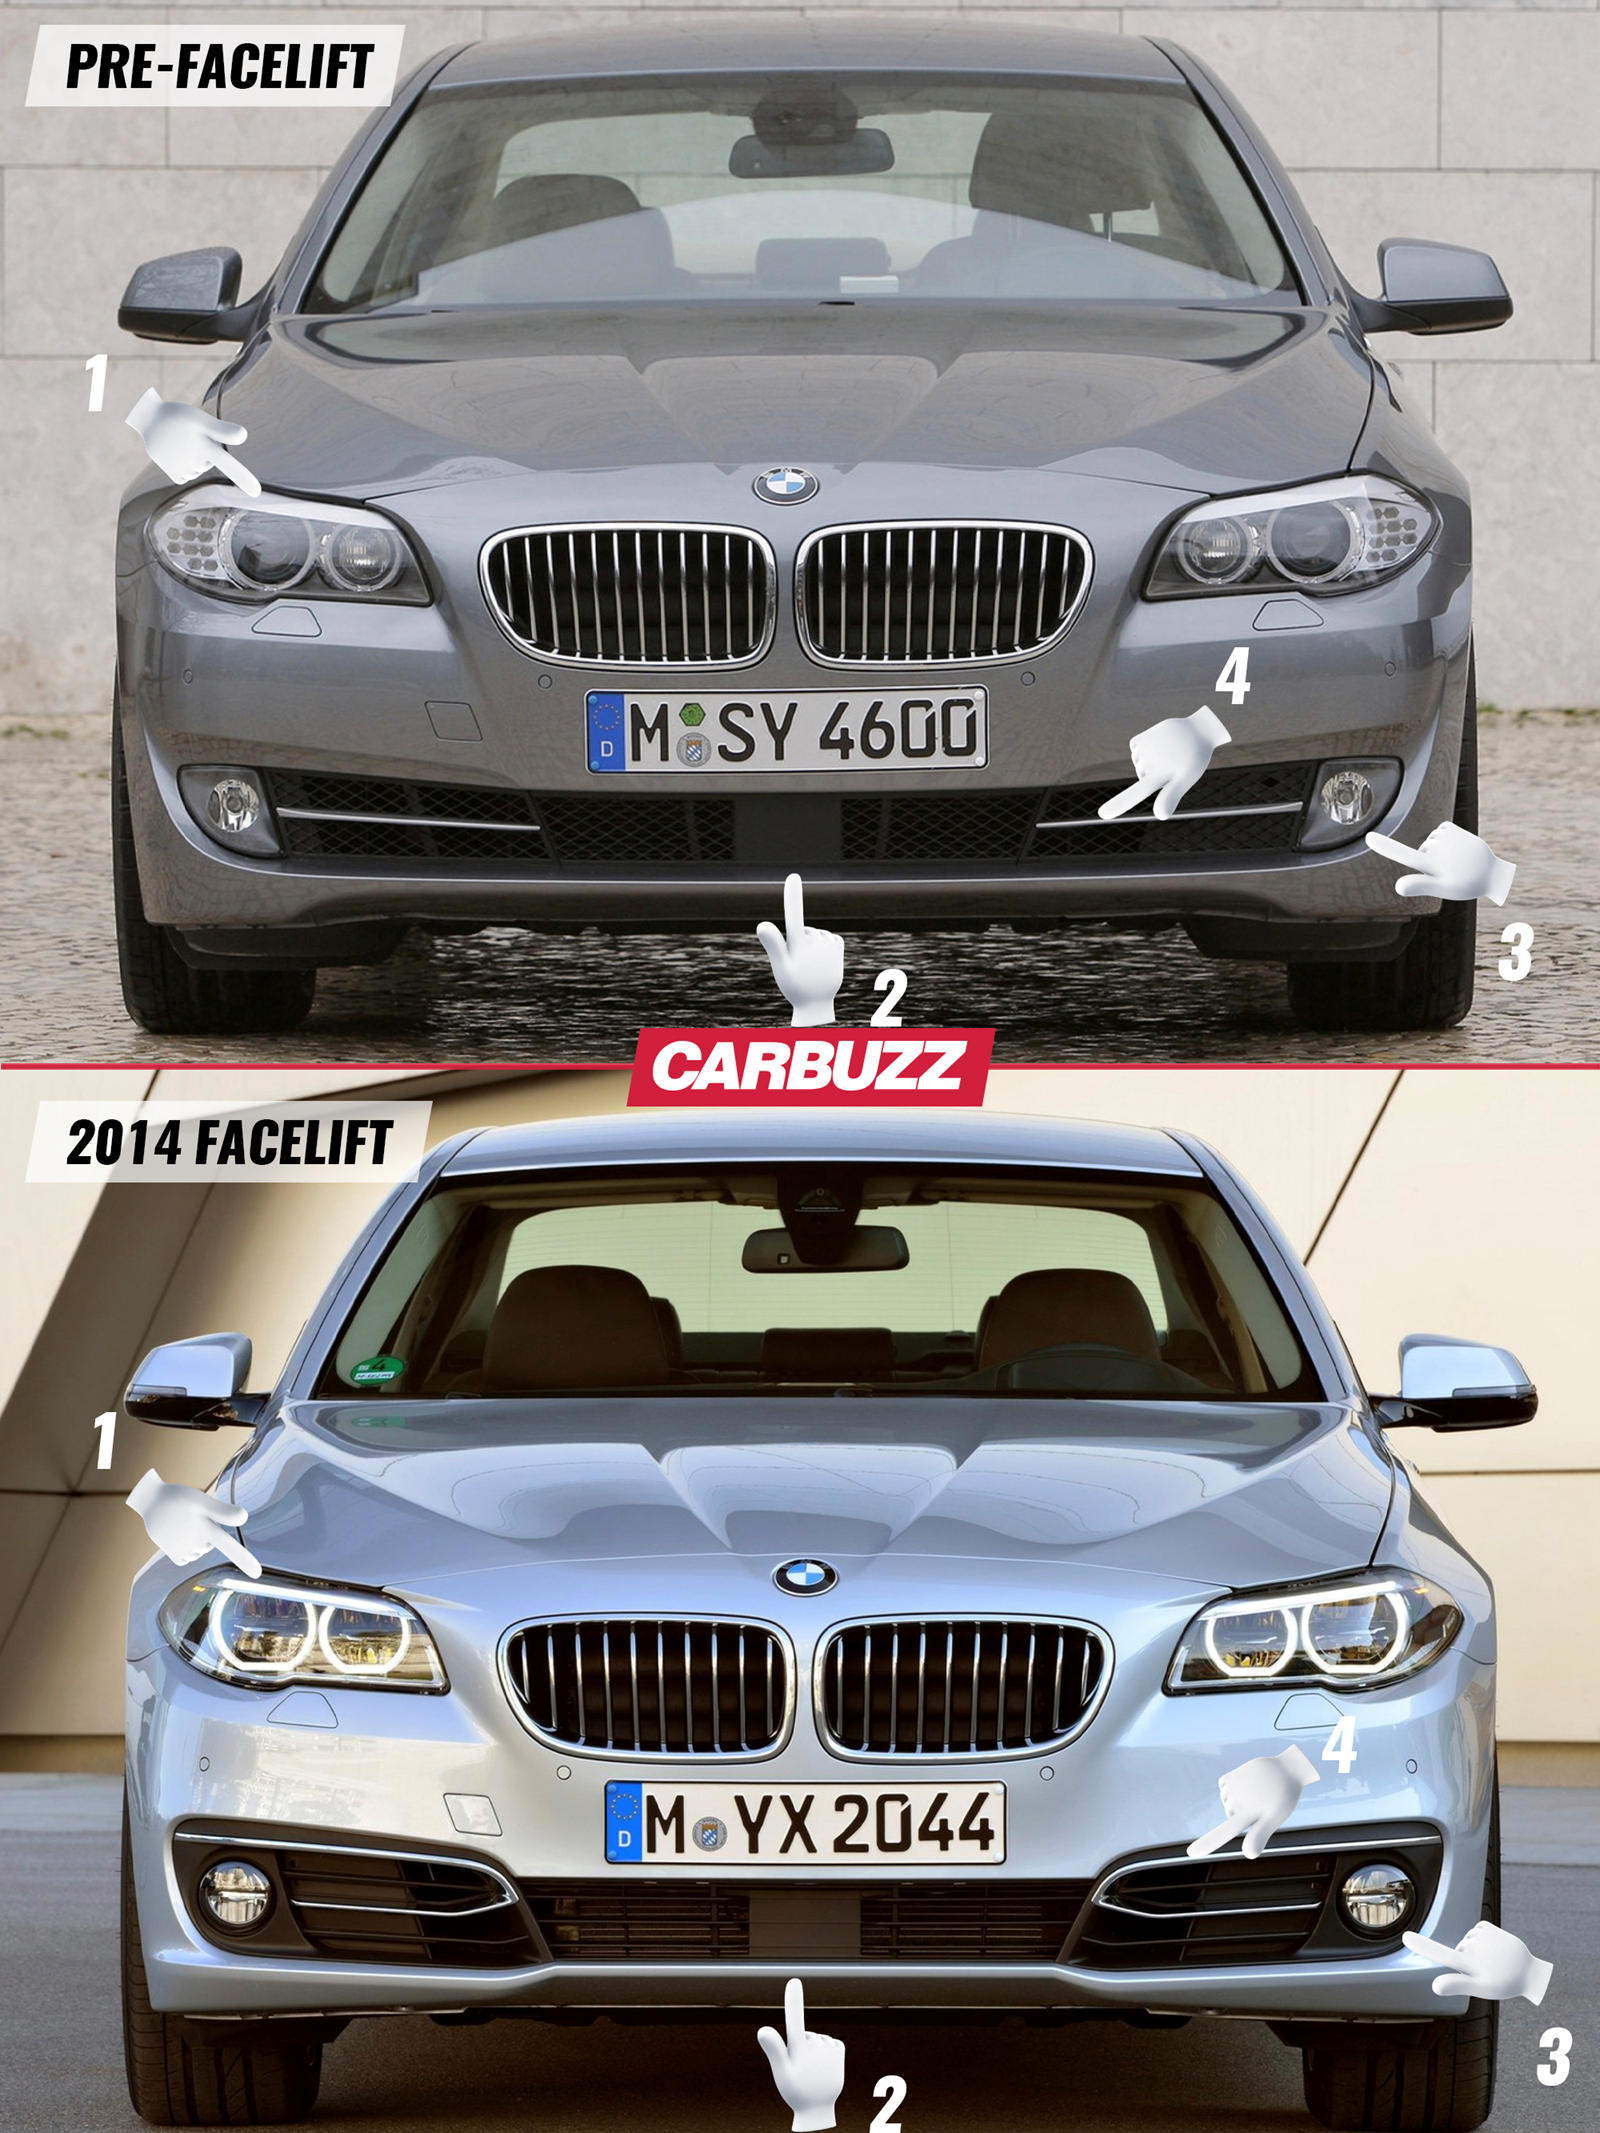 Specs for all BMW F10 5 Series Sedan LCI versions